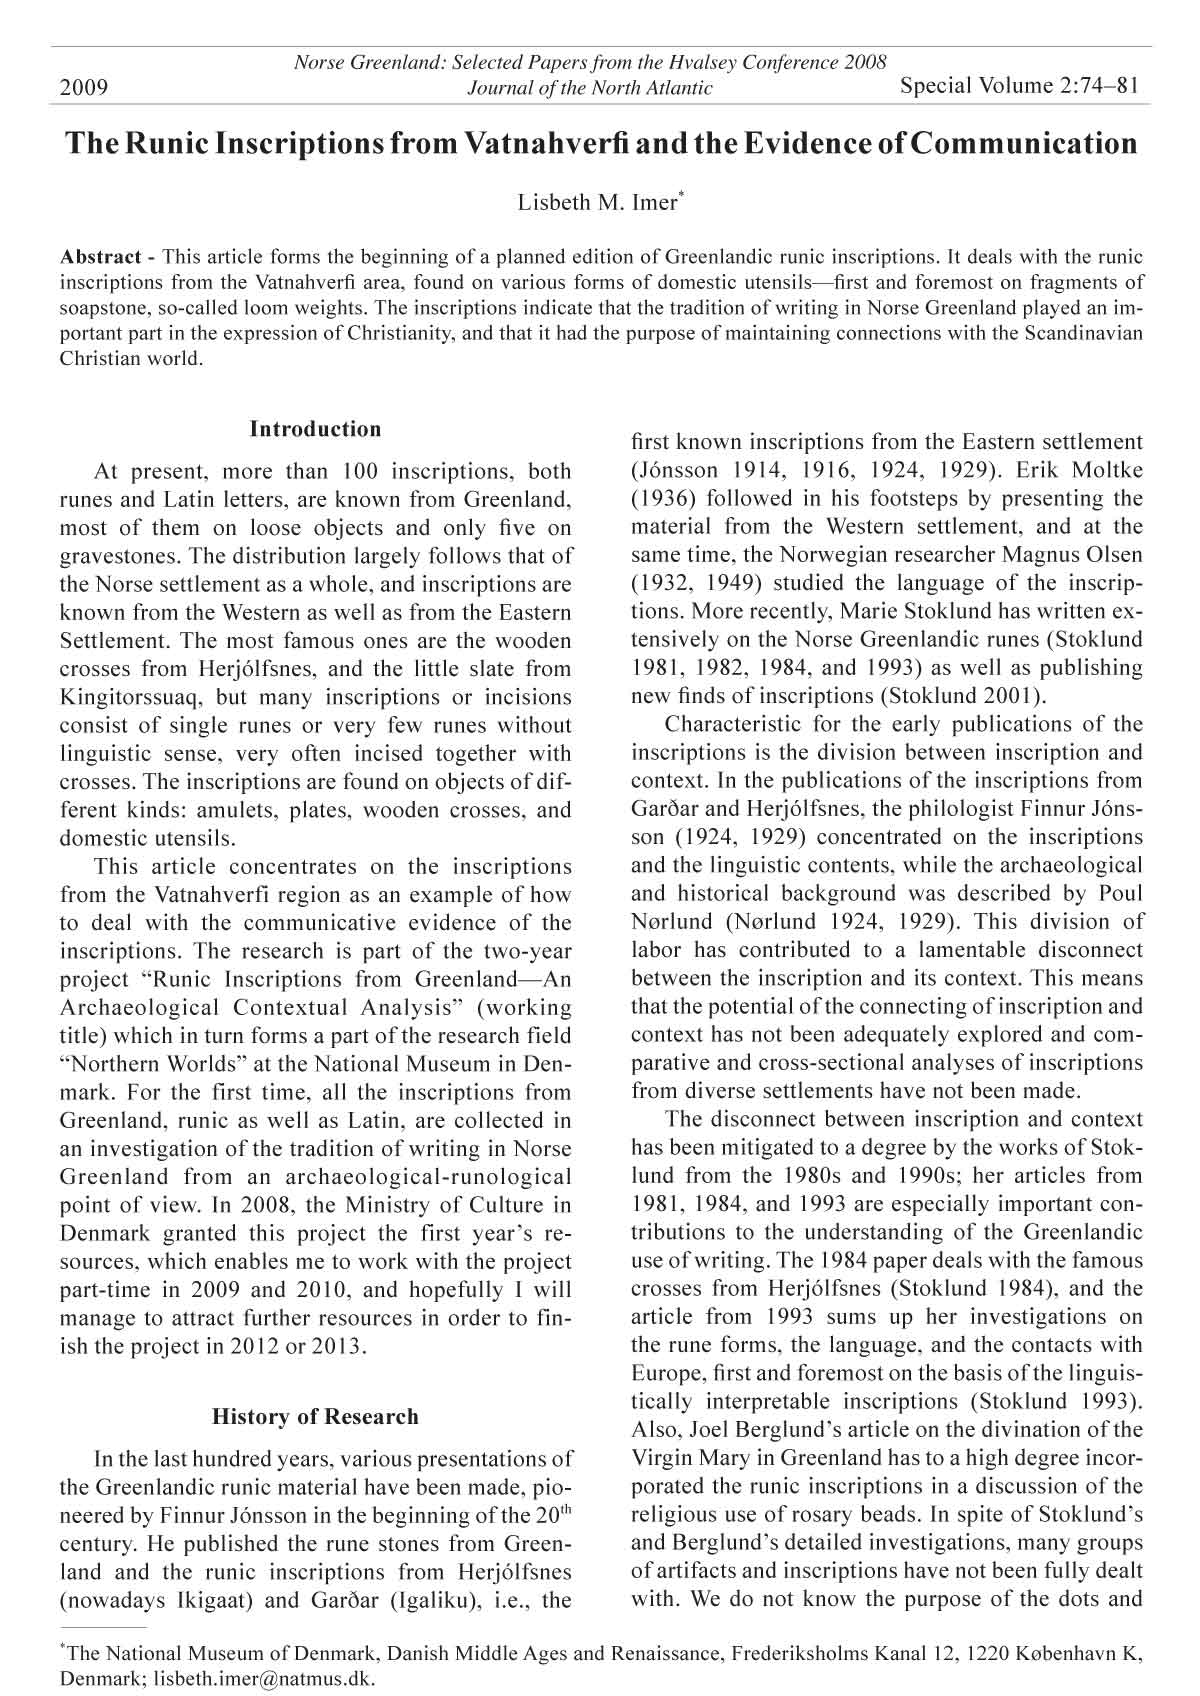 JONA Vol. 1 abstract page